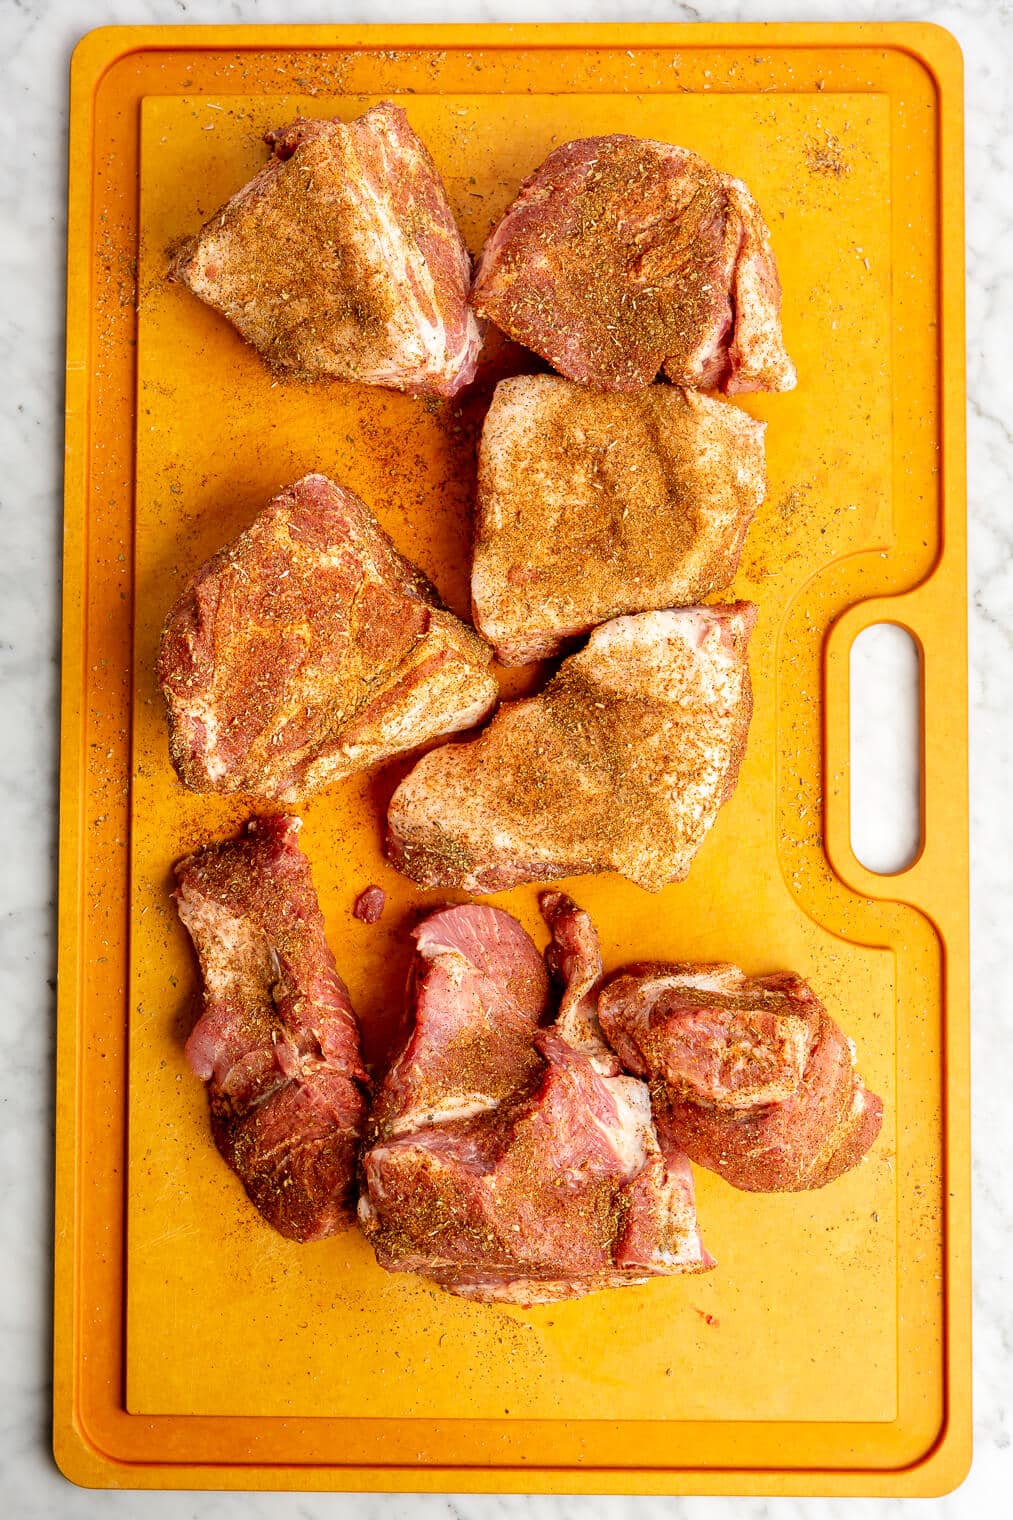 Chunks of pork shoulder on a cutting board seasoned with seasoning.